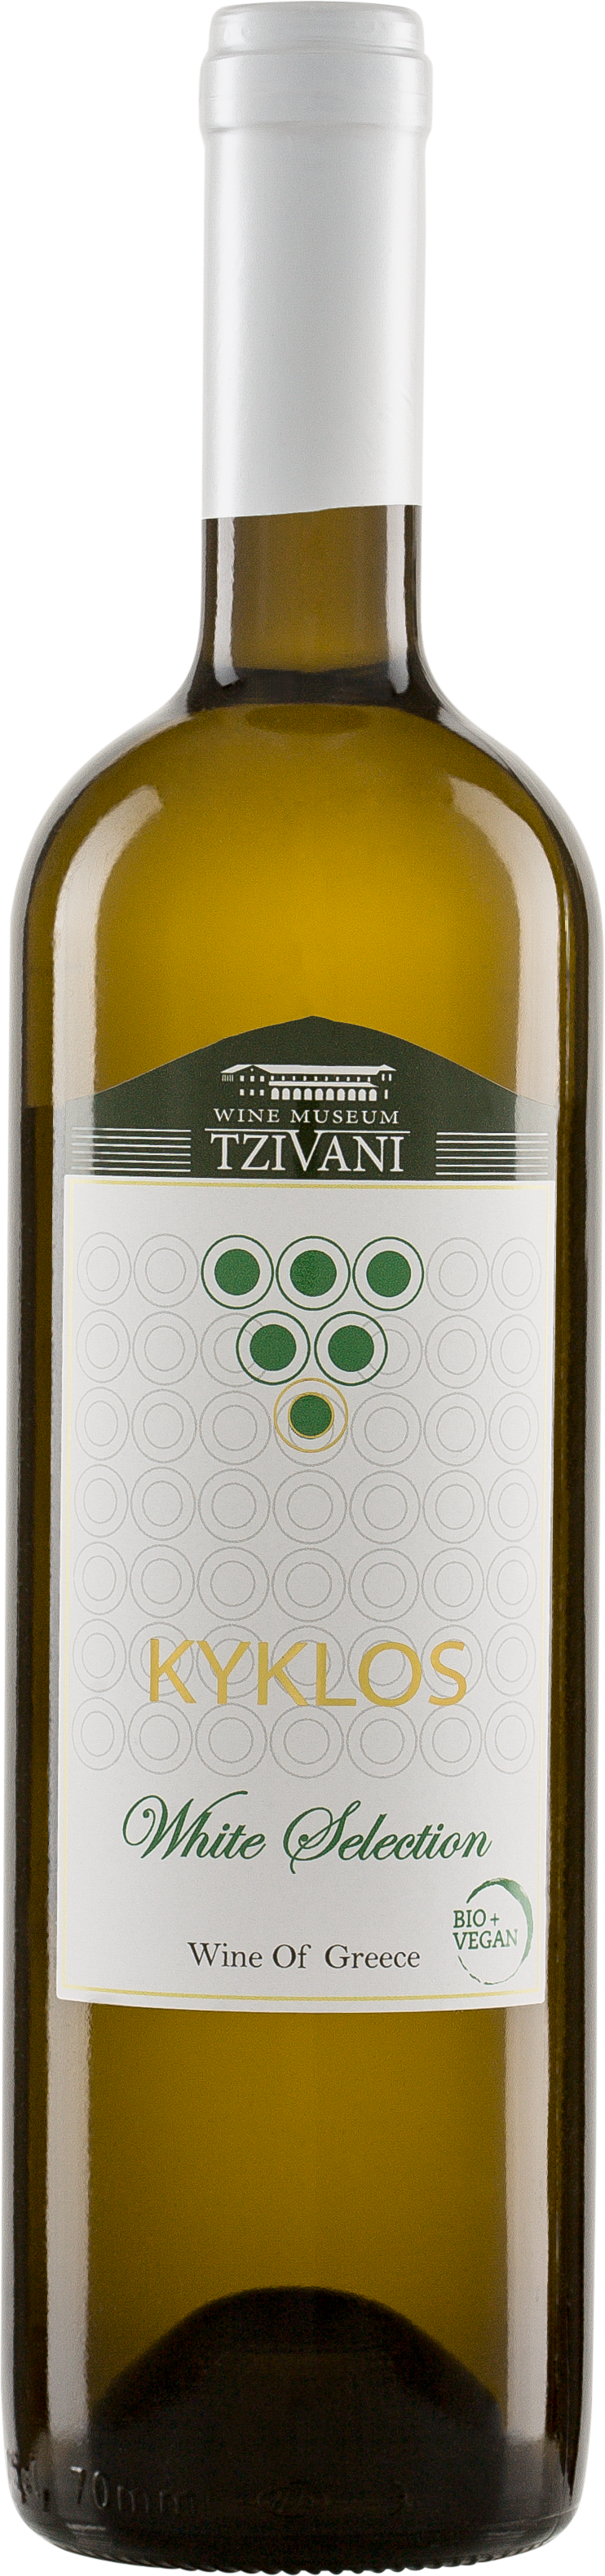 Tzivani Kyklos White Selection, Sauvignon Blanc - Chardonnay, Grækenland